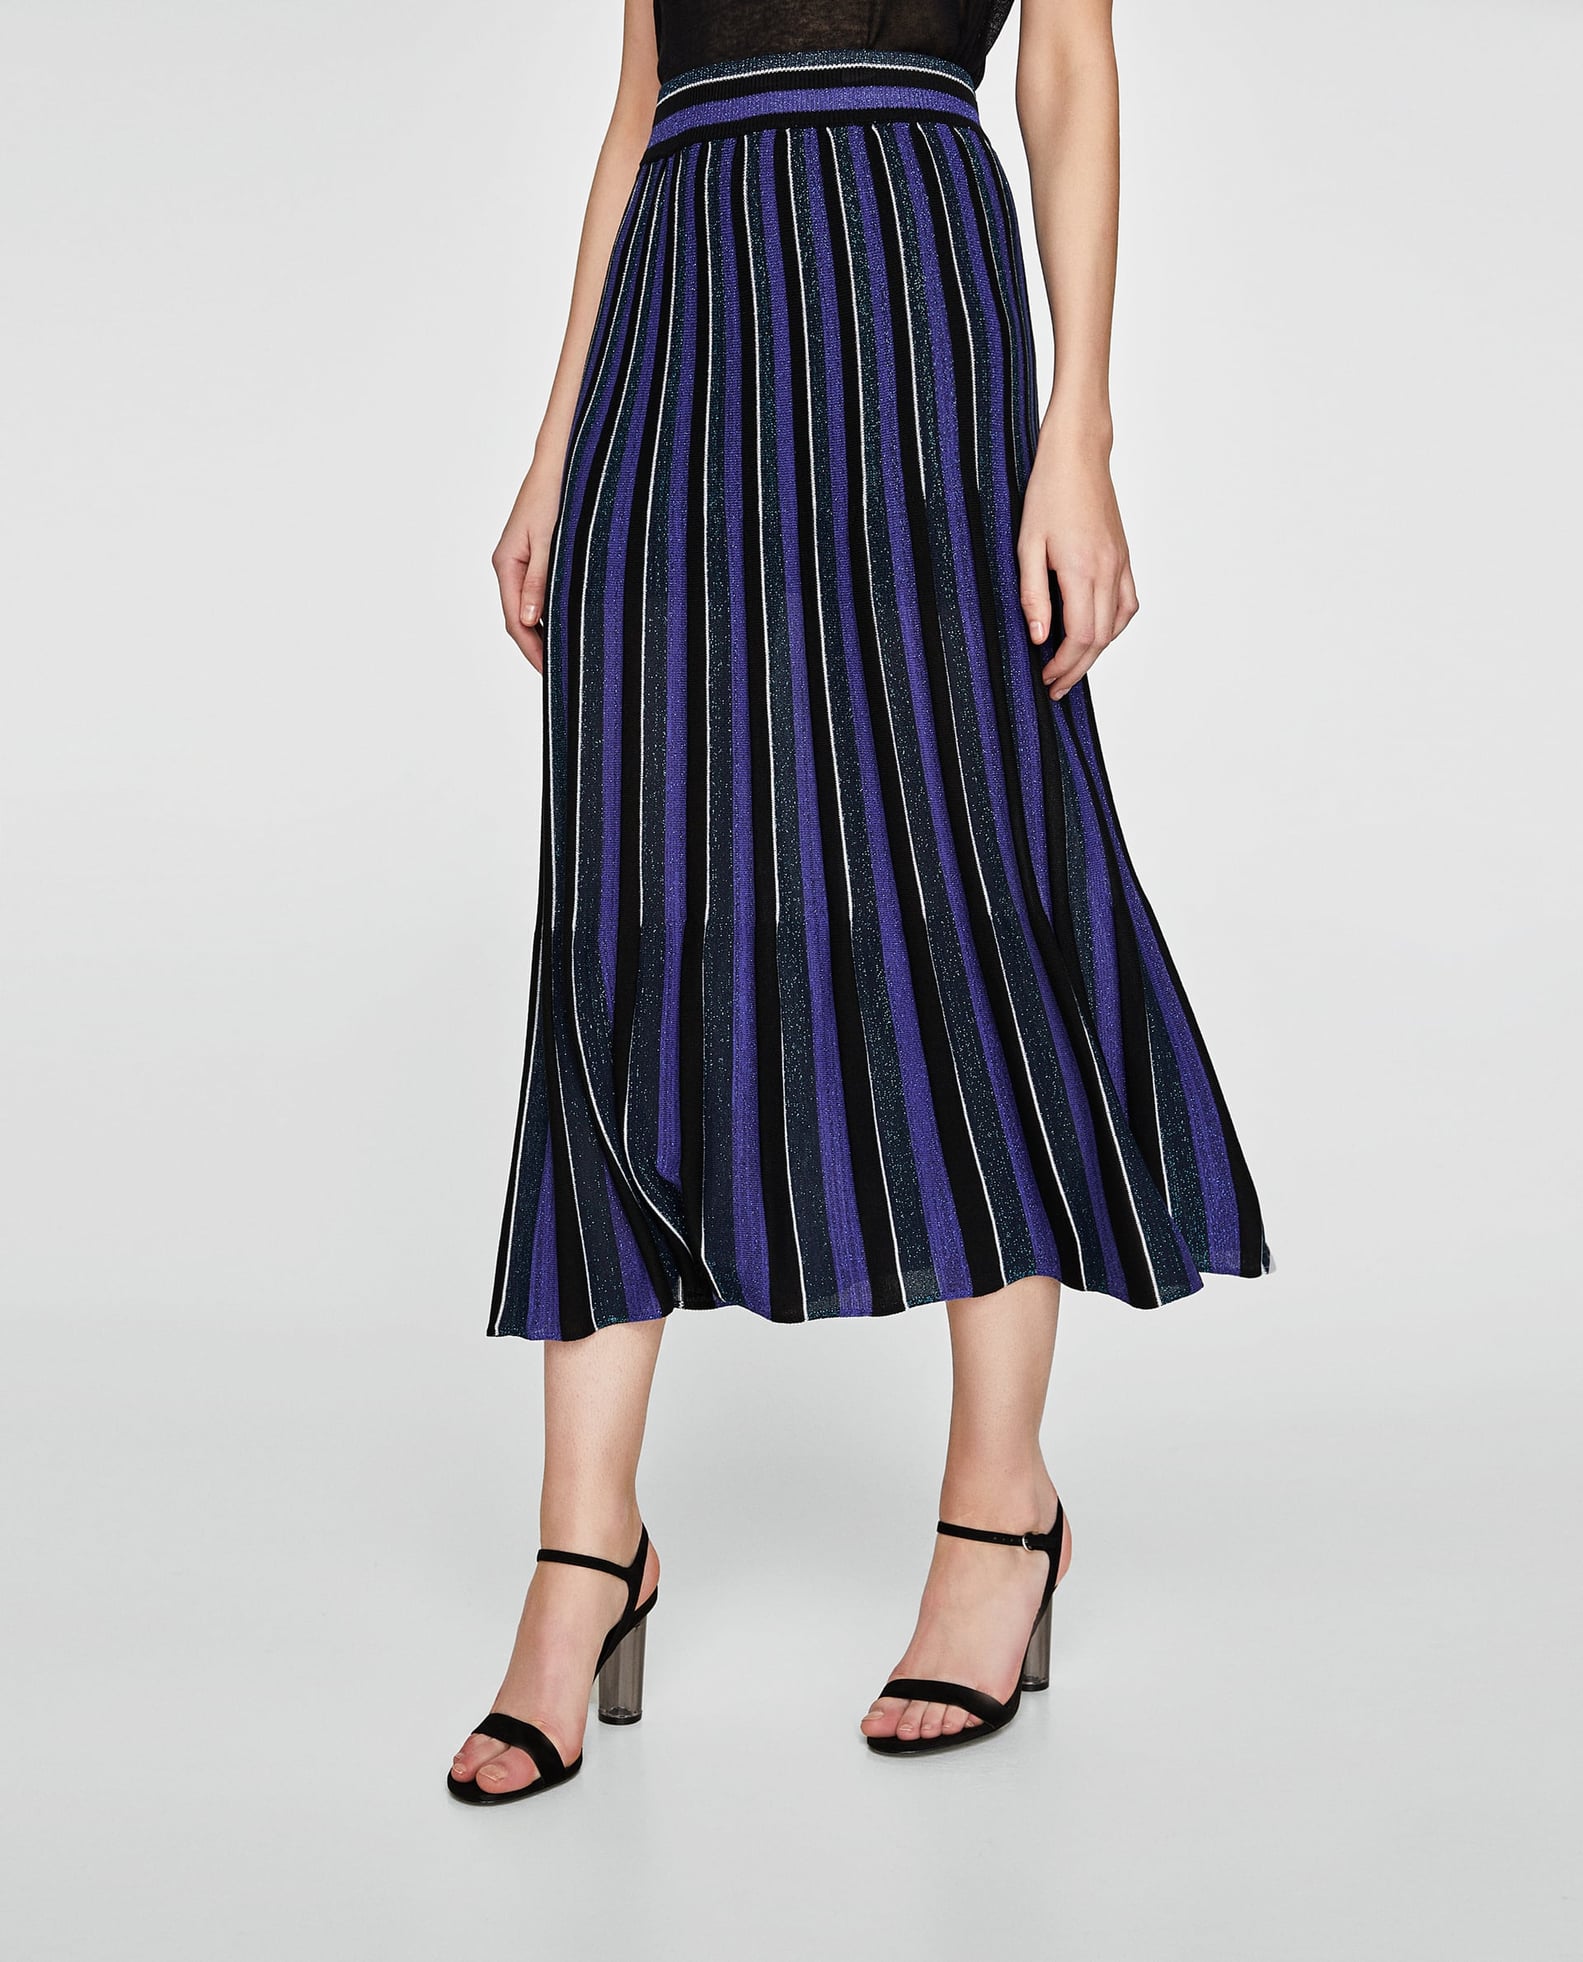 Mary-Kate and Ashley Olsen Long Skirts and Turtlenecks | POPSUGAR Fashion